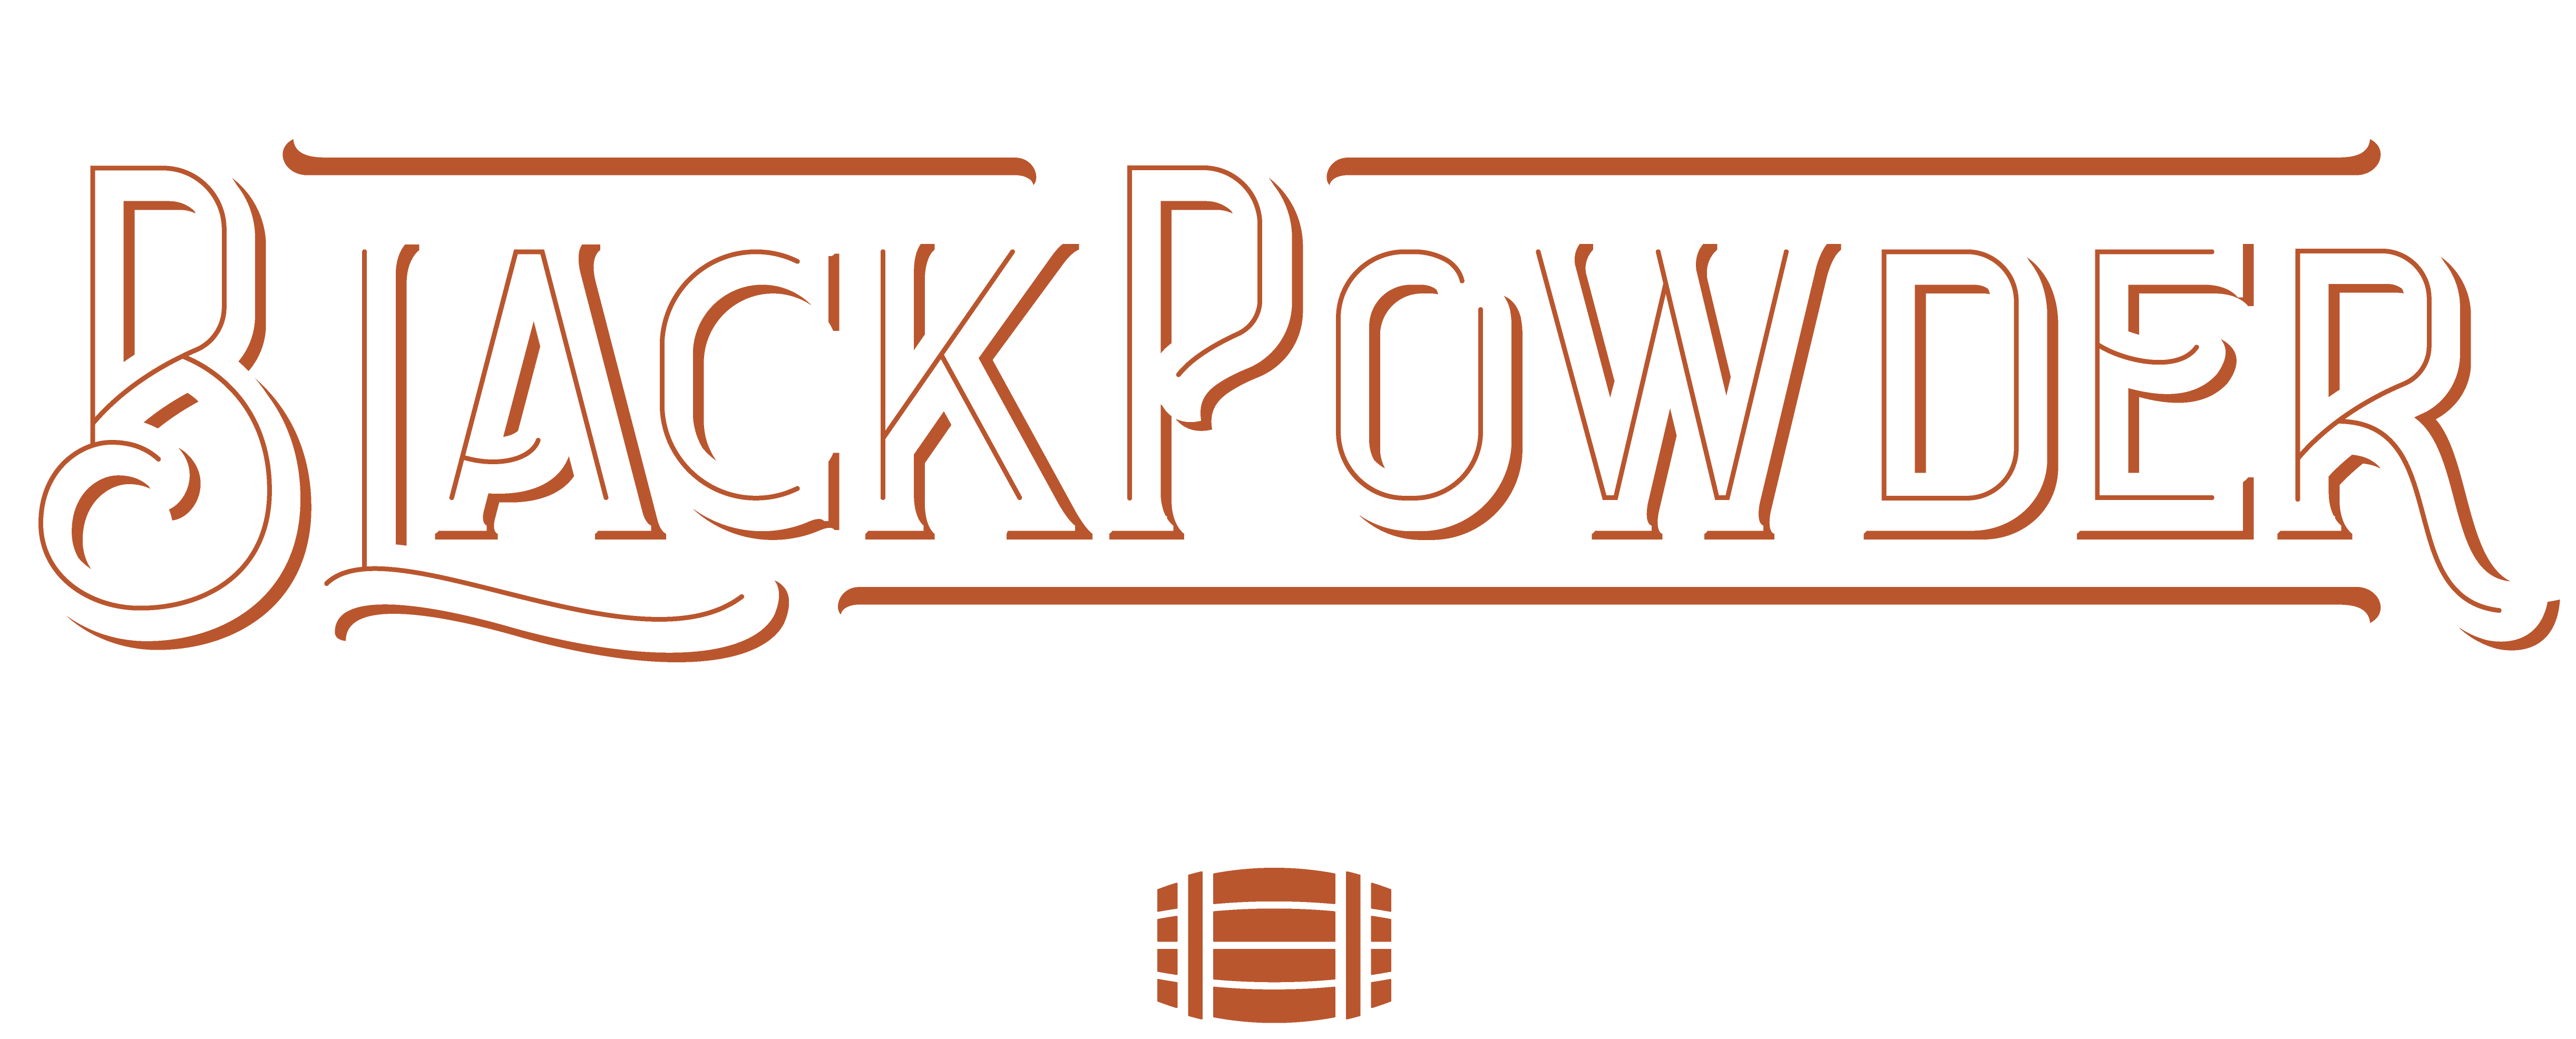 Black Powder Smokehouse - Barbecue Restaurant in NC